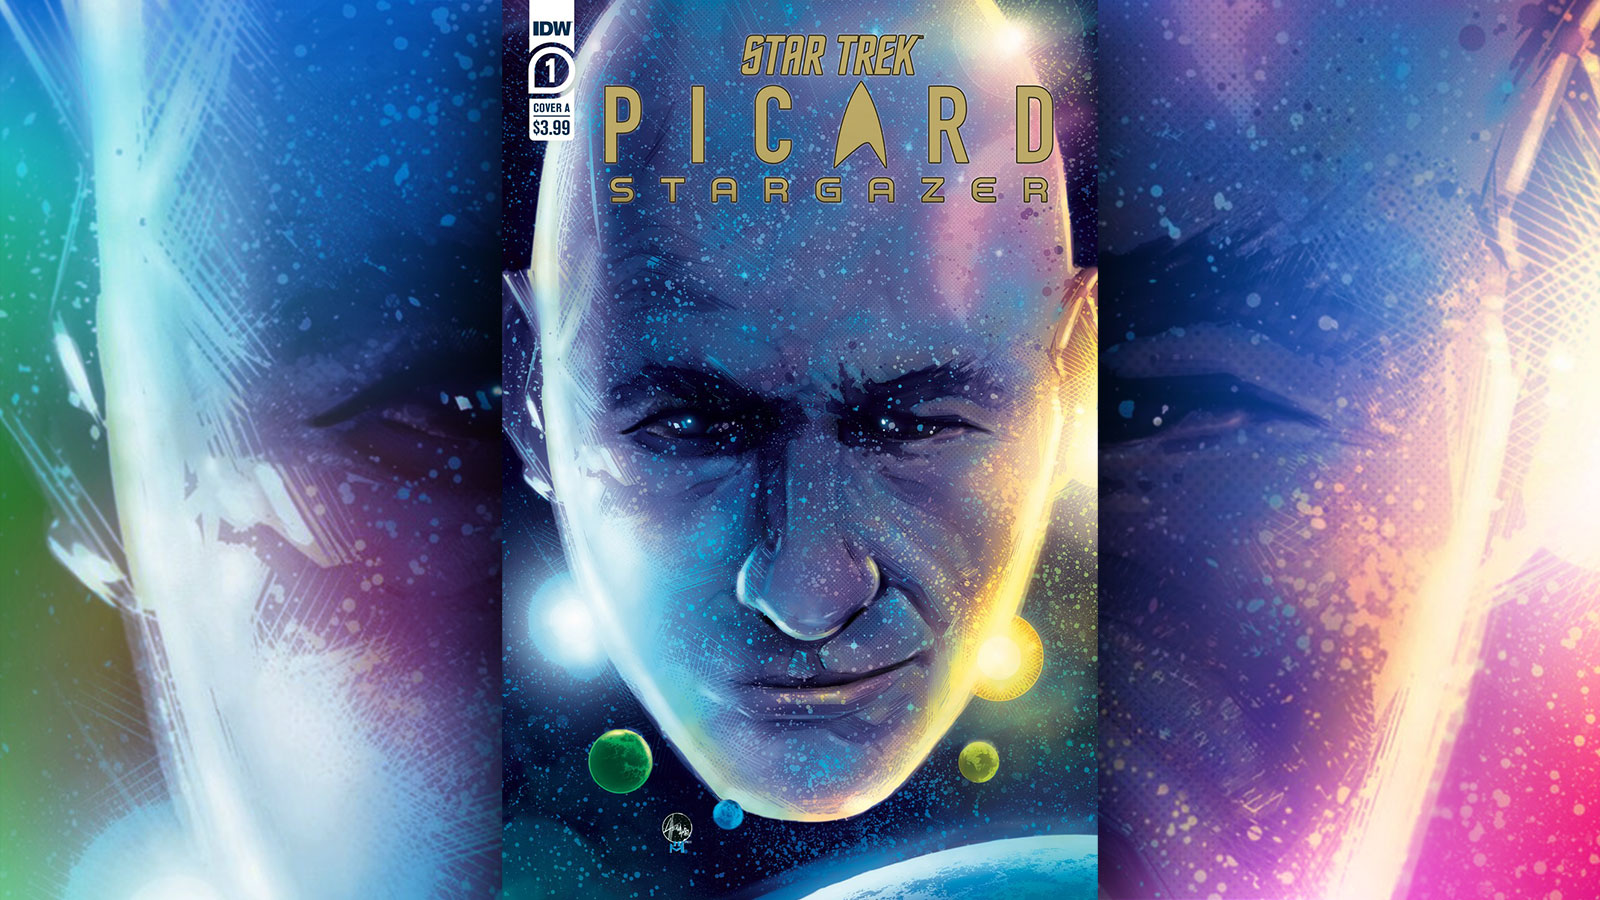 Star Trek: Picard – Stargazer #1 Review: A new Picard-Seven adventure begins